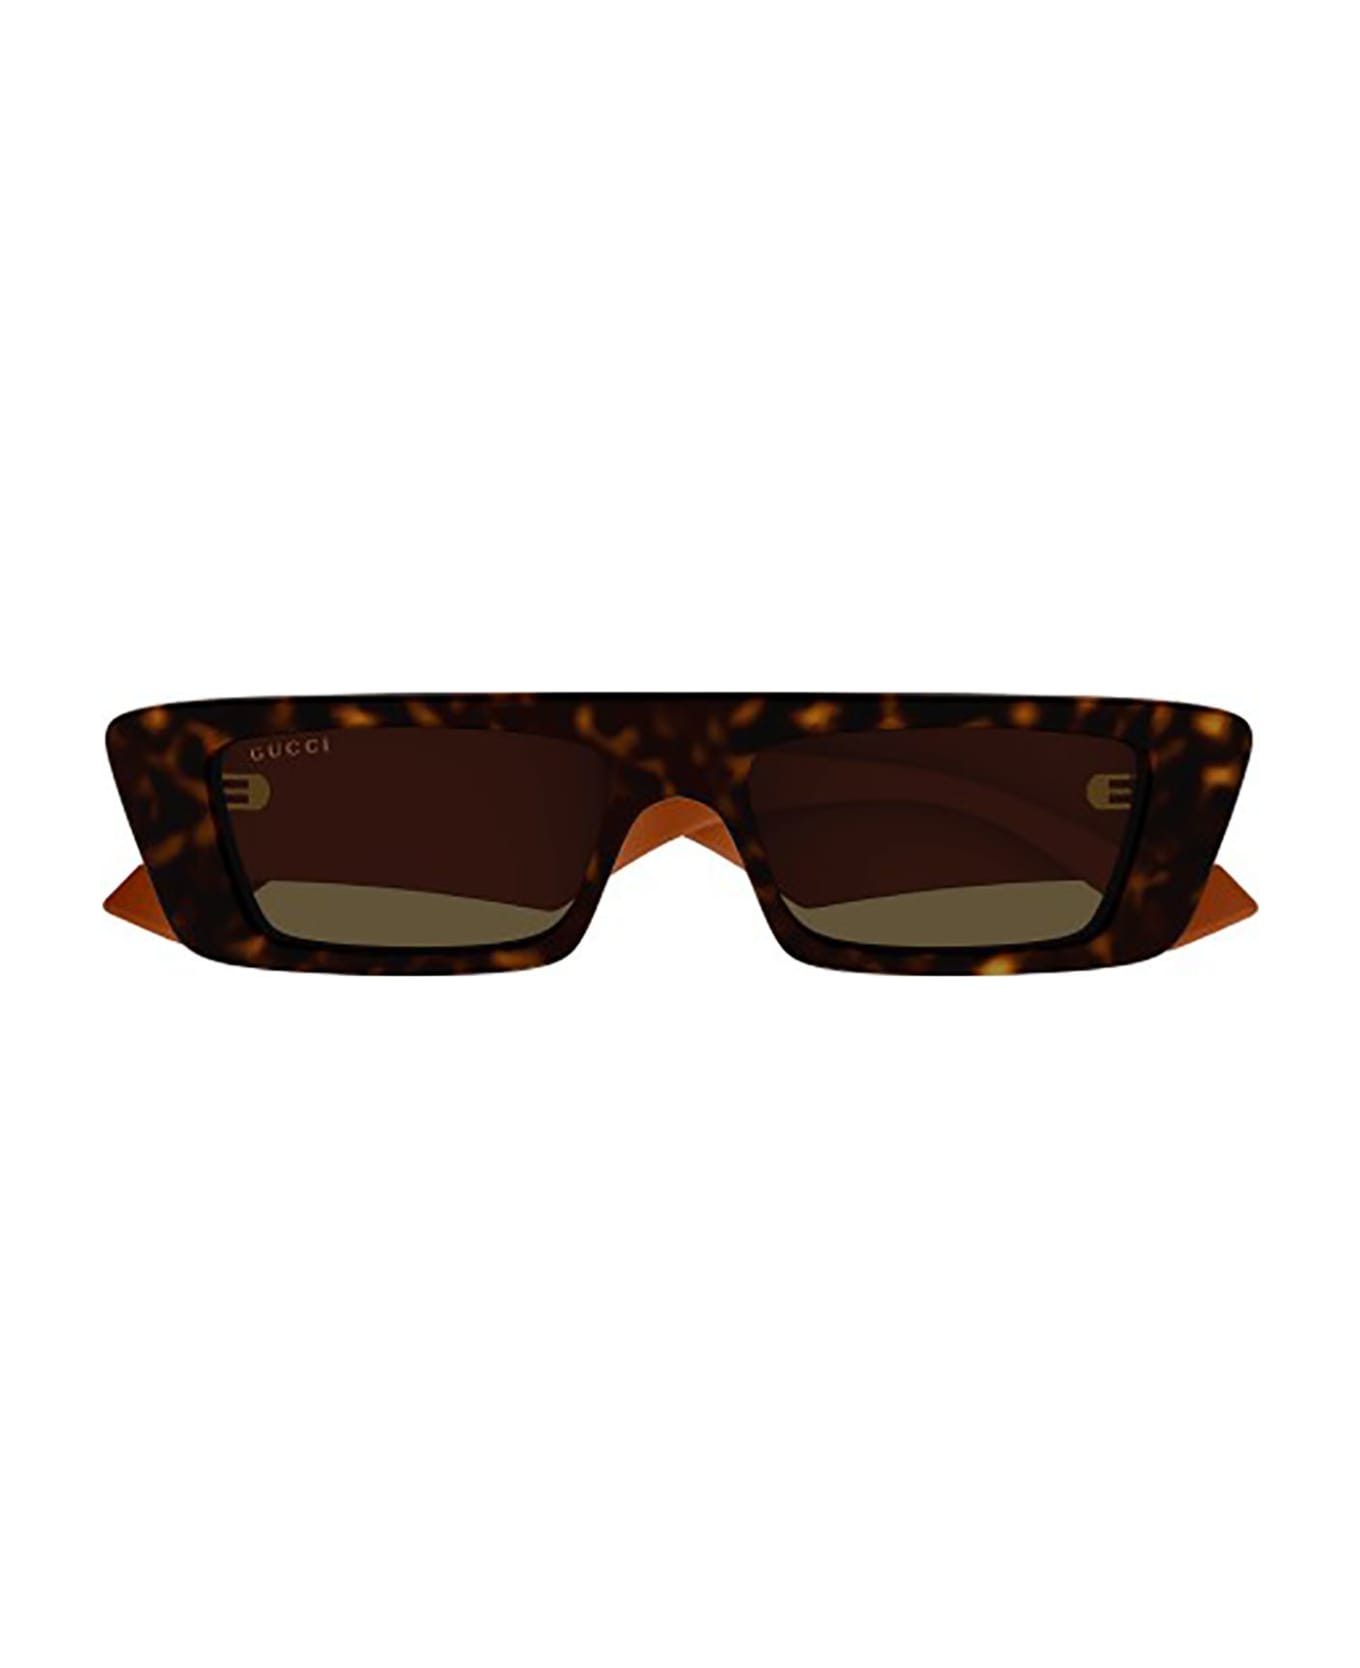 Gucci Eyewear GG1331S Sunglasses - Havana Orange Brown